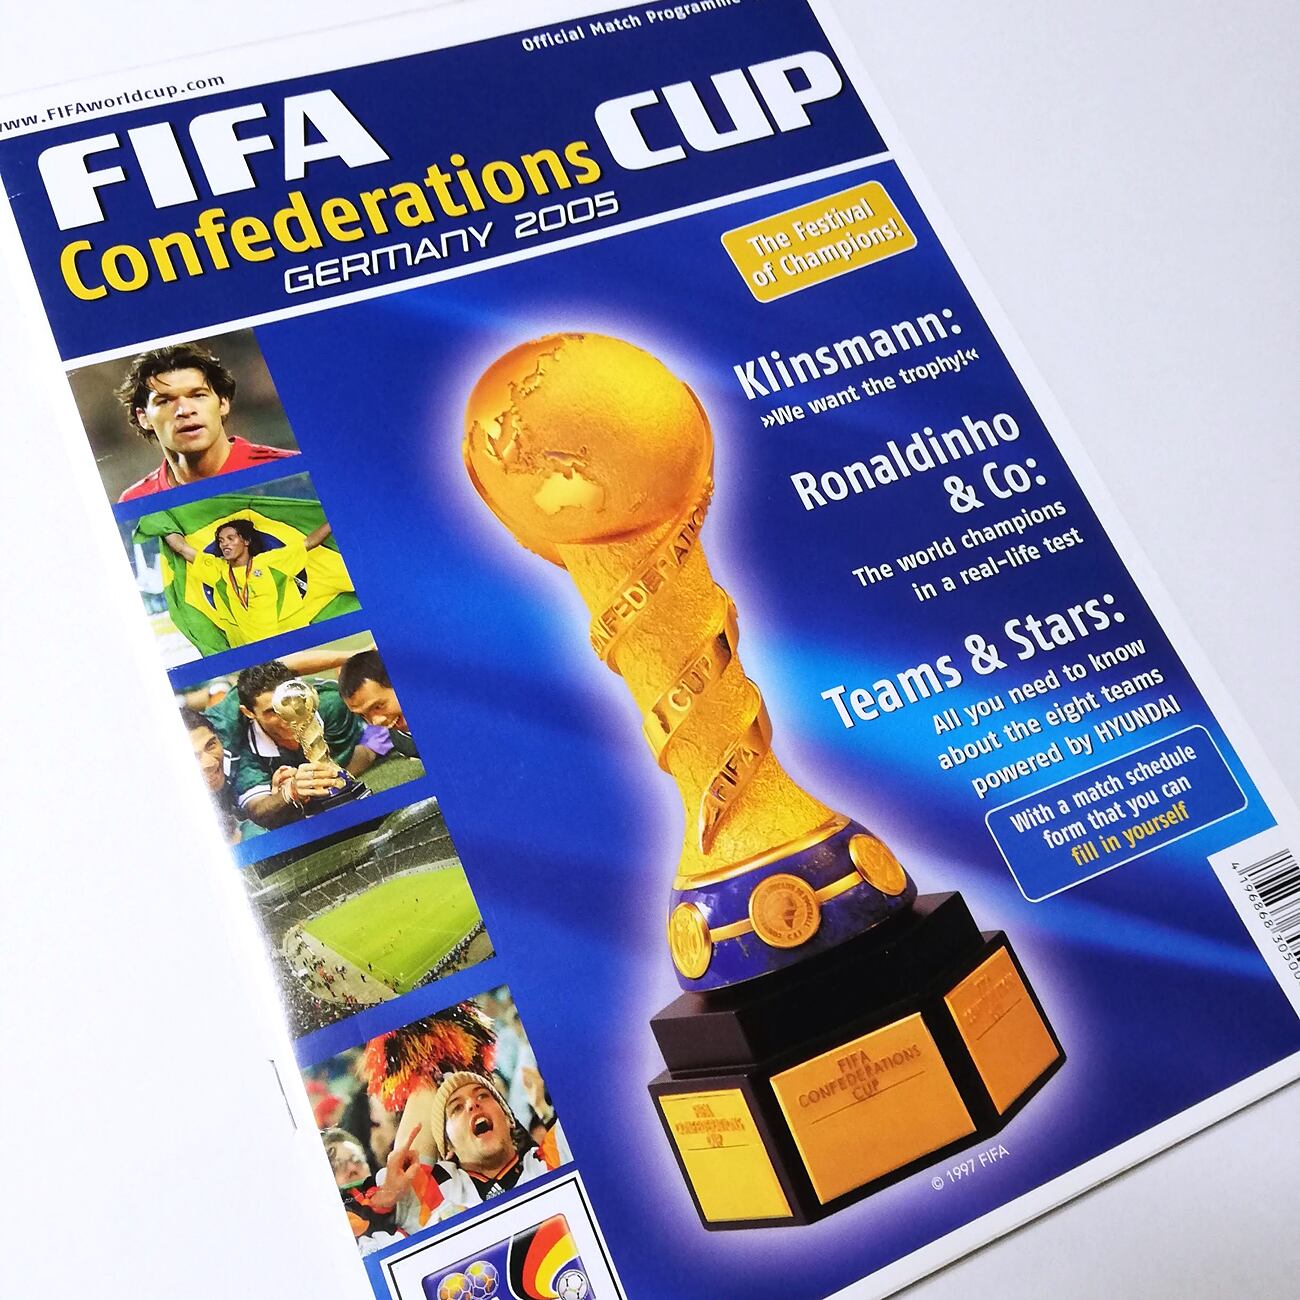 FIFAコンフェデレーションズカップ2005 ドイツ大会 公式プログラム 